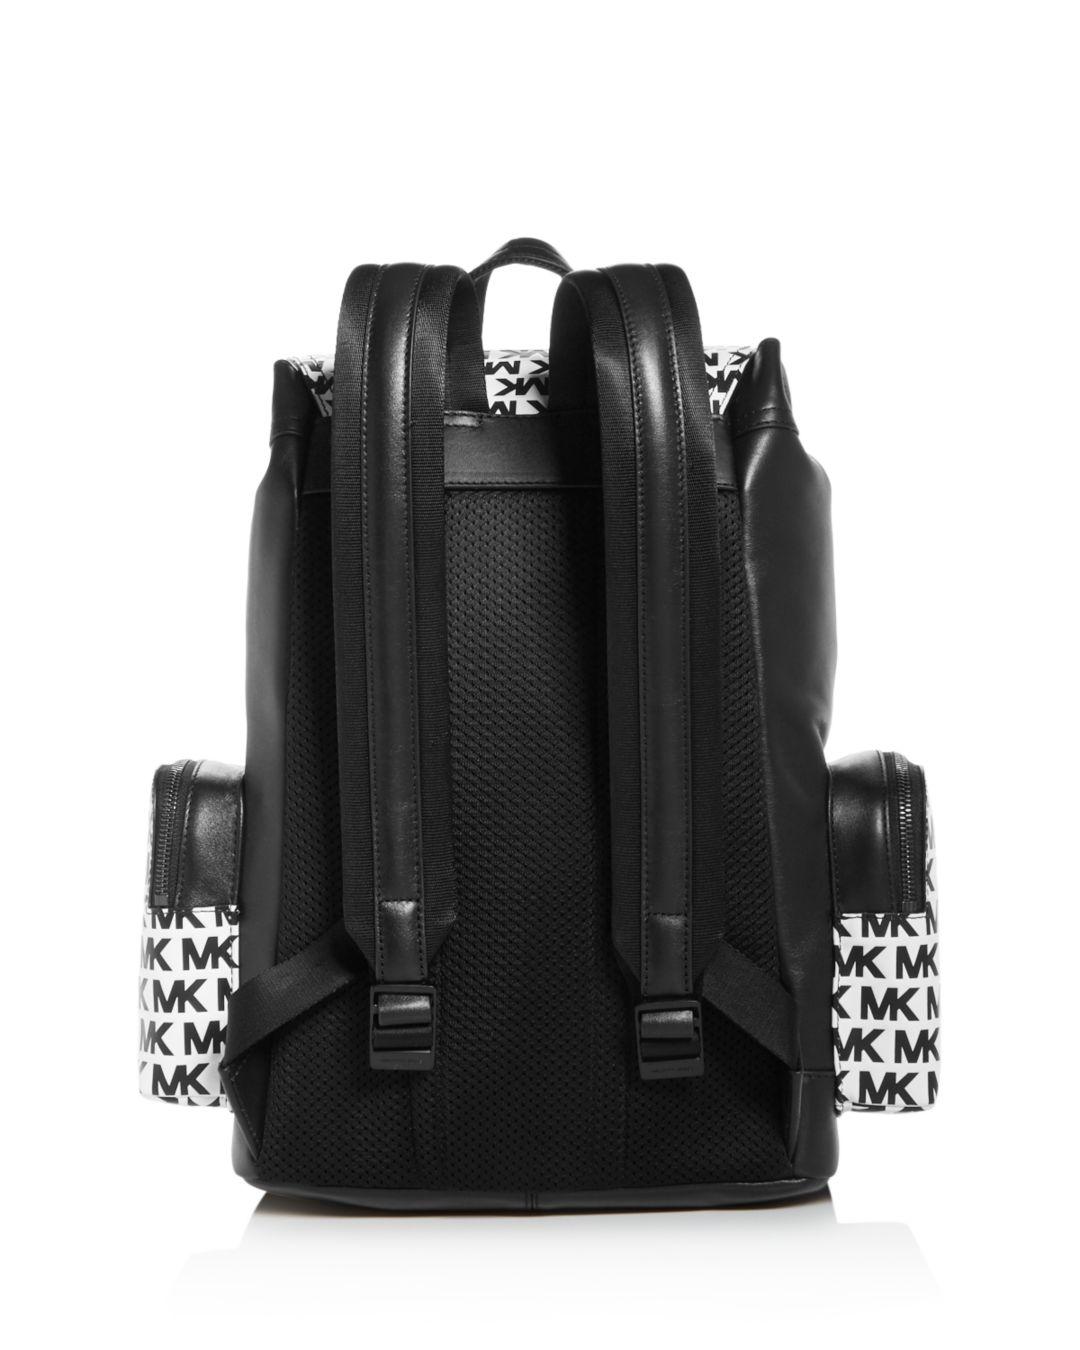 Michael Kors Henry Leather Backpack in Black for Men - Lyst